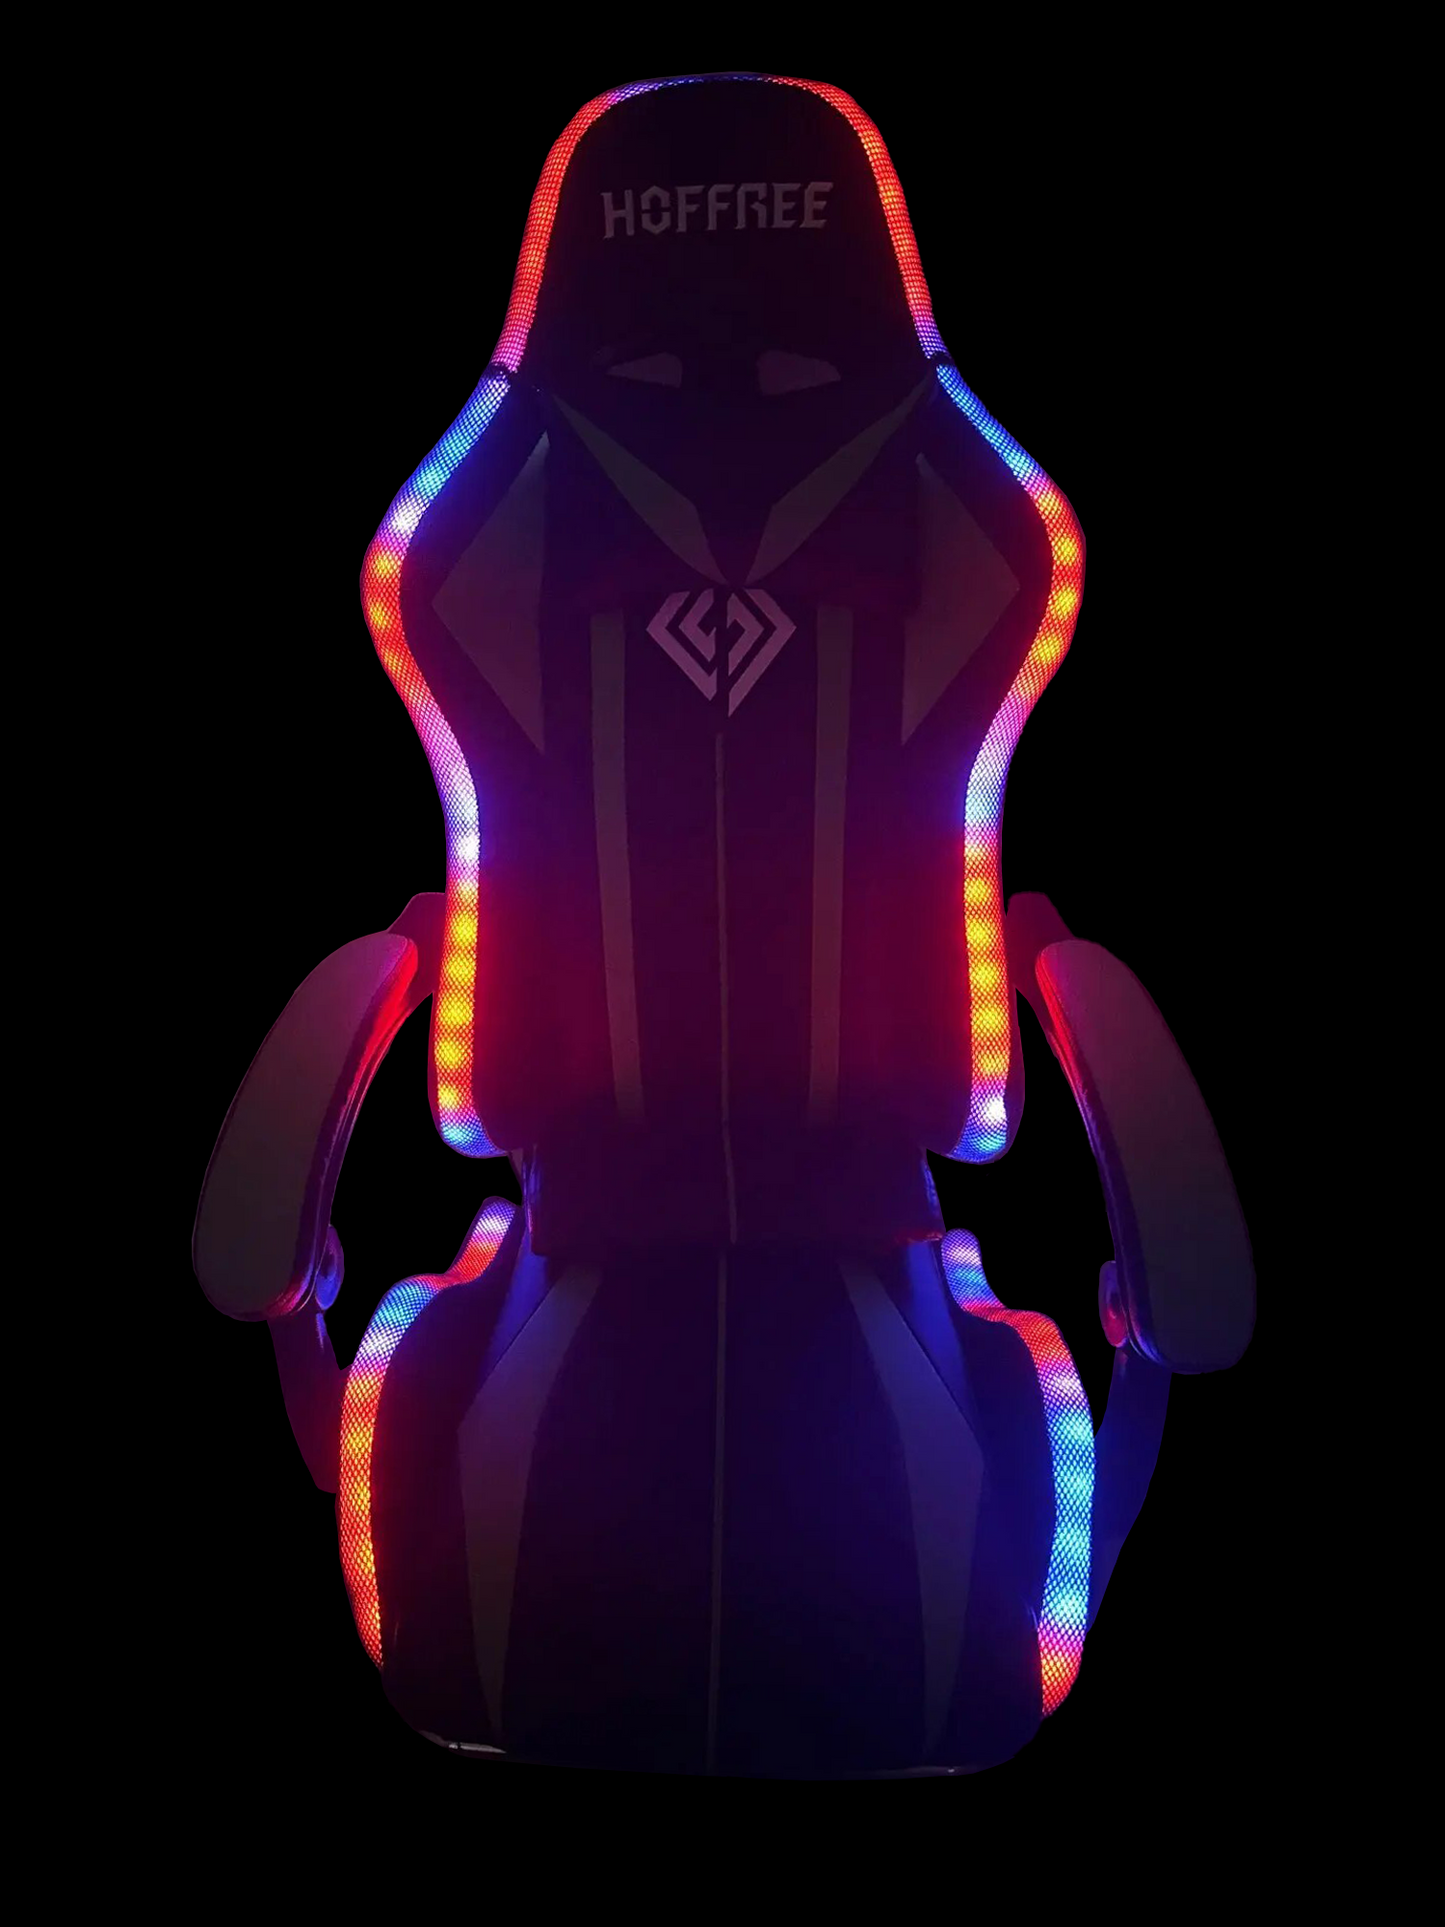 High Quality RGB Gaming Chair